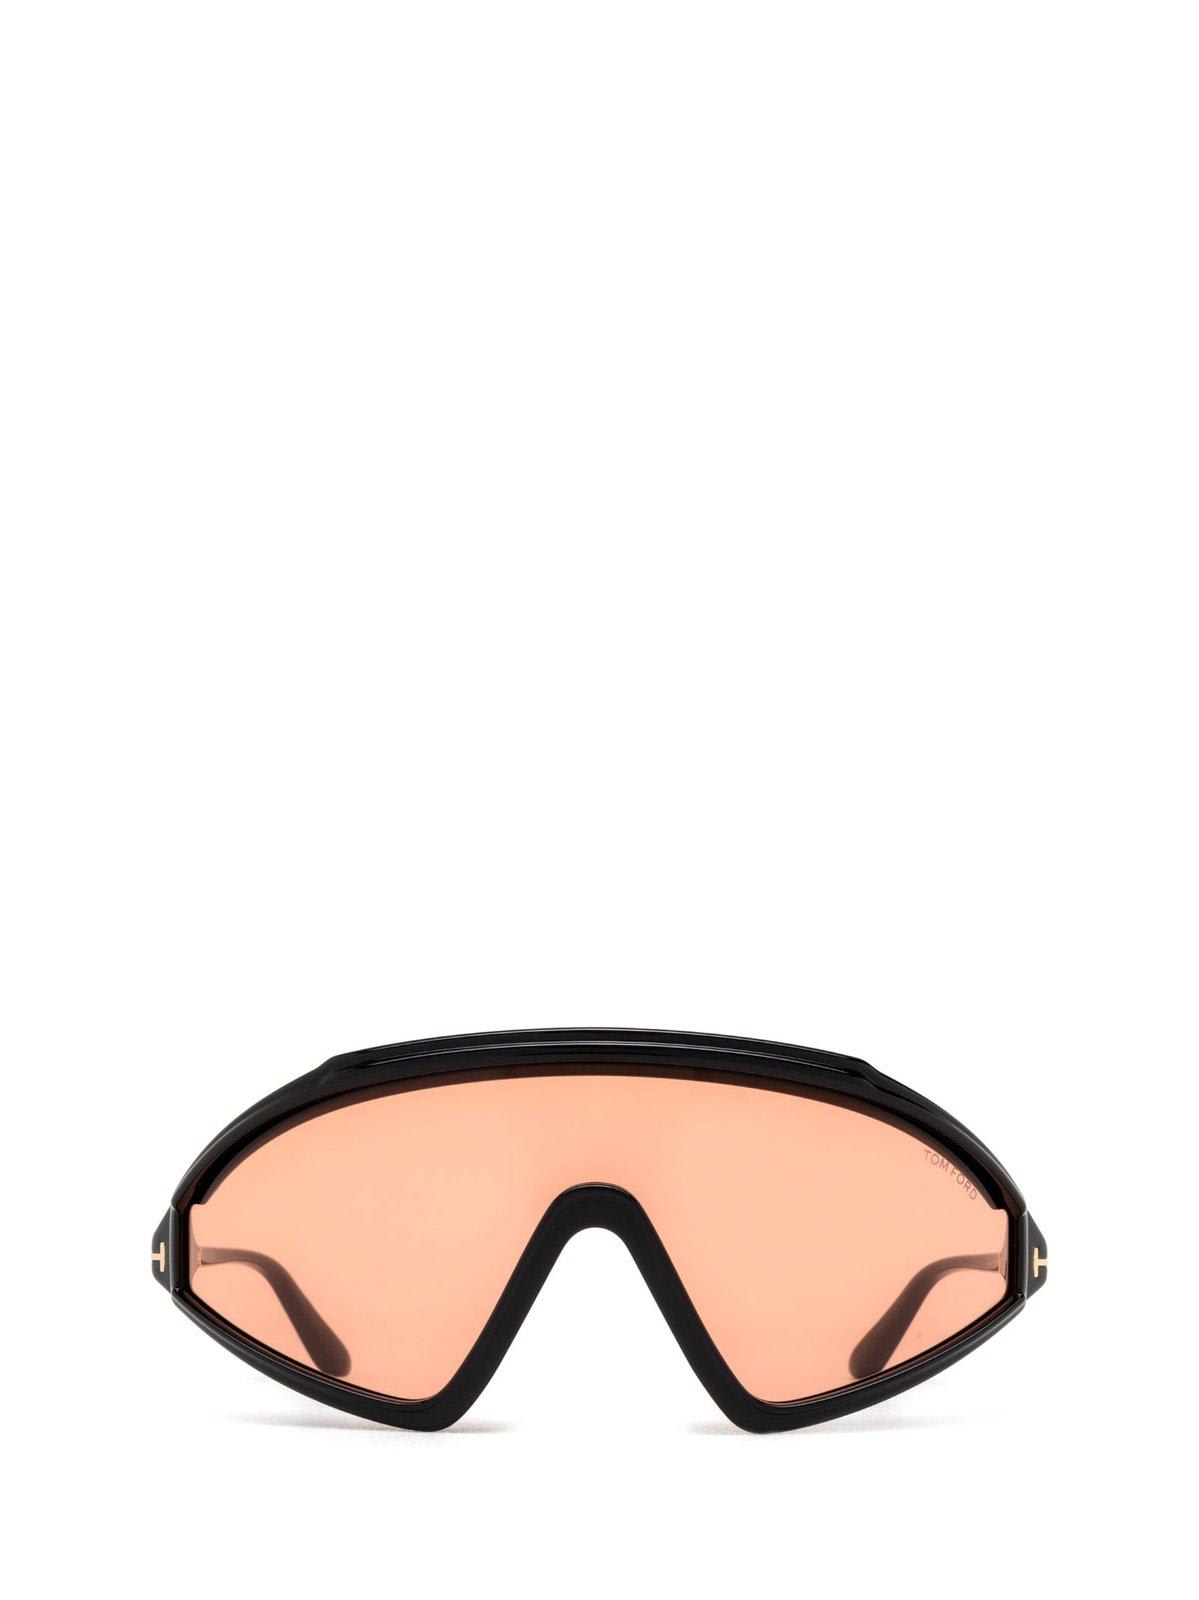 Lorna Shield Frame Sunglasses